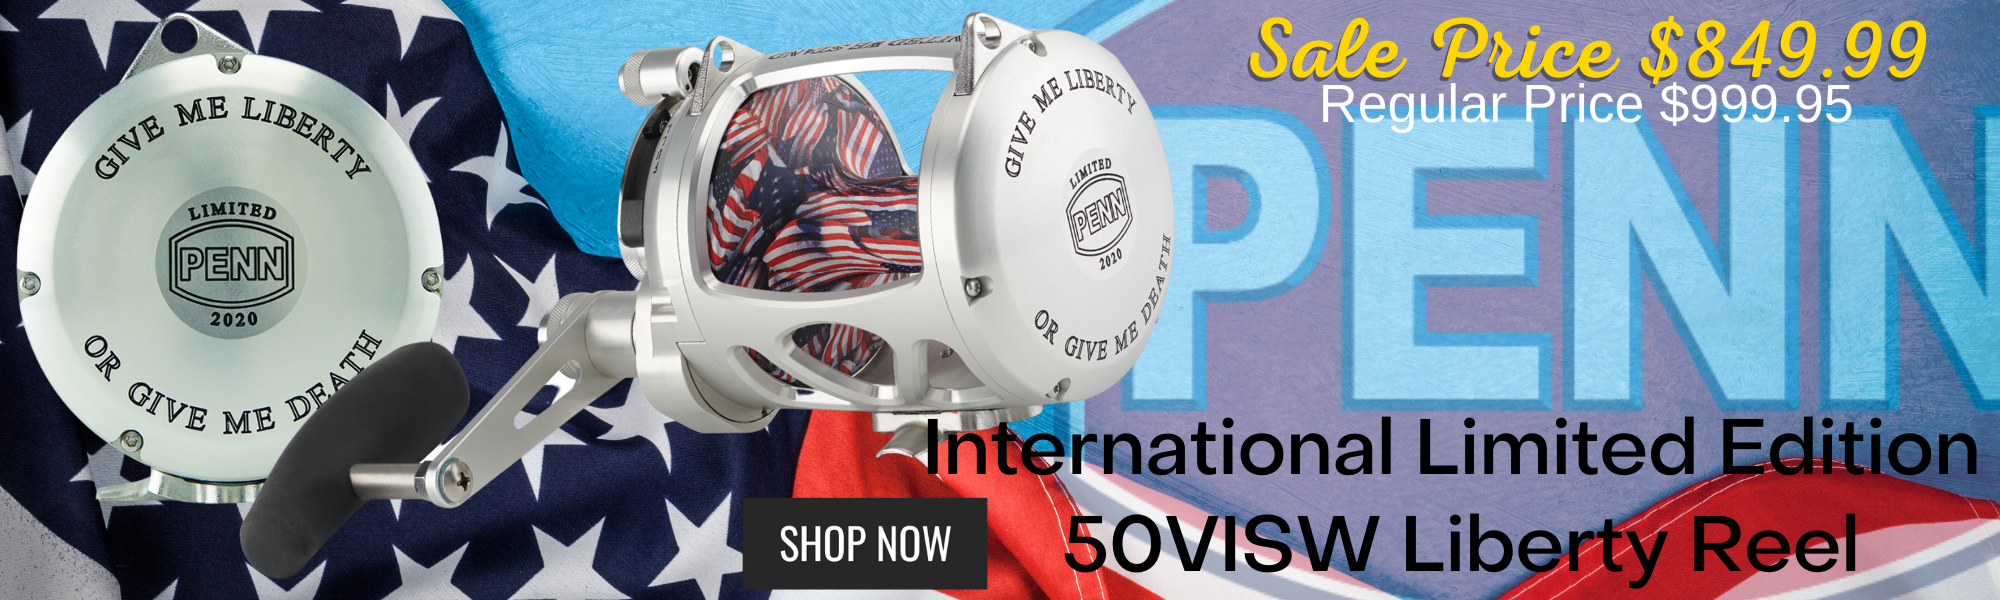 penn international 50 visw limited edition reel